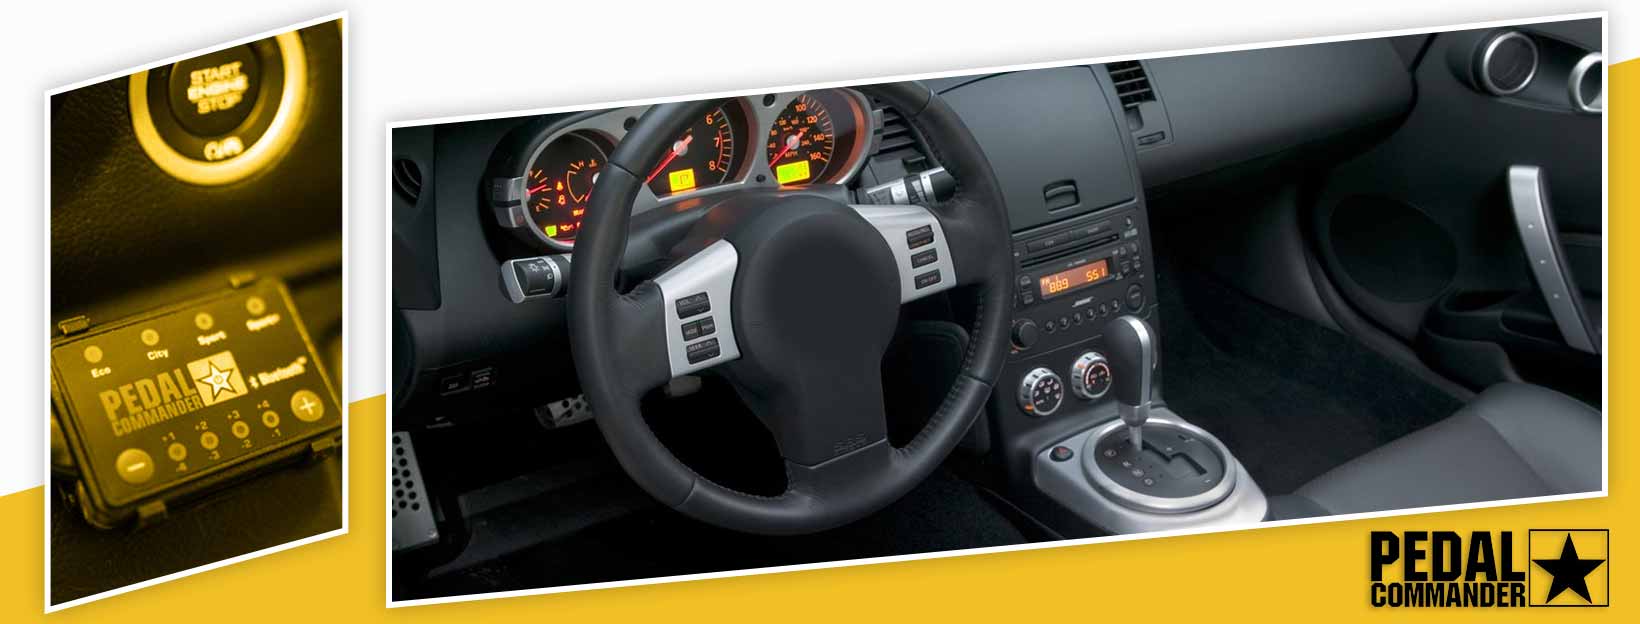 Pedal Commander for Nissan 350Z - interior